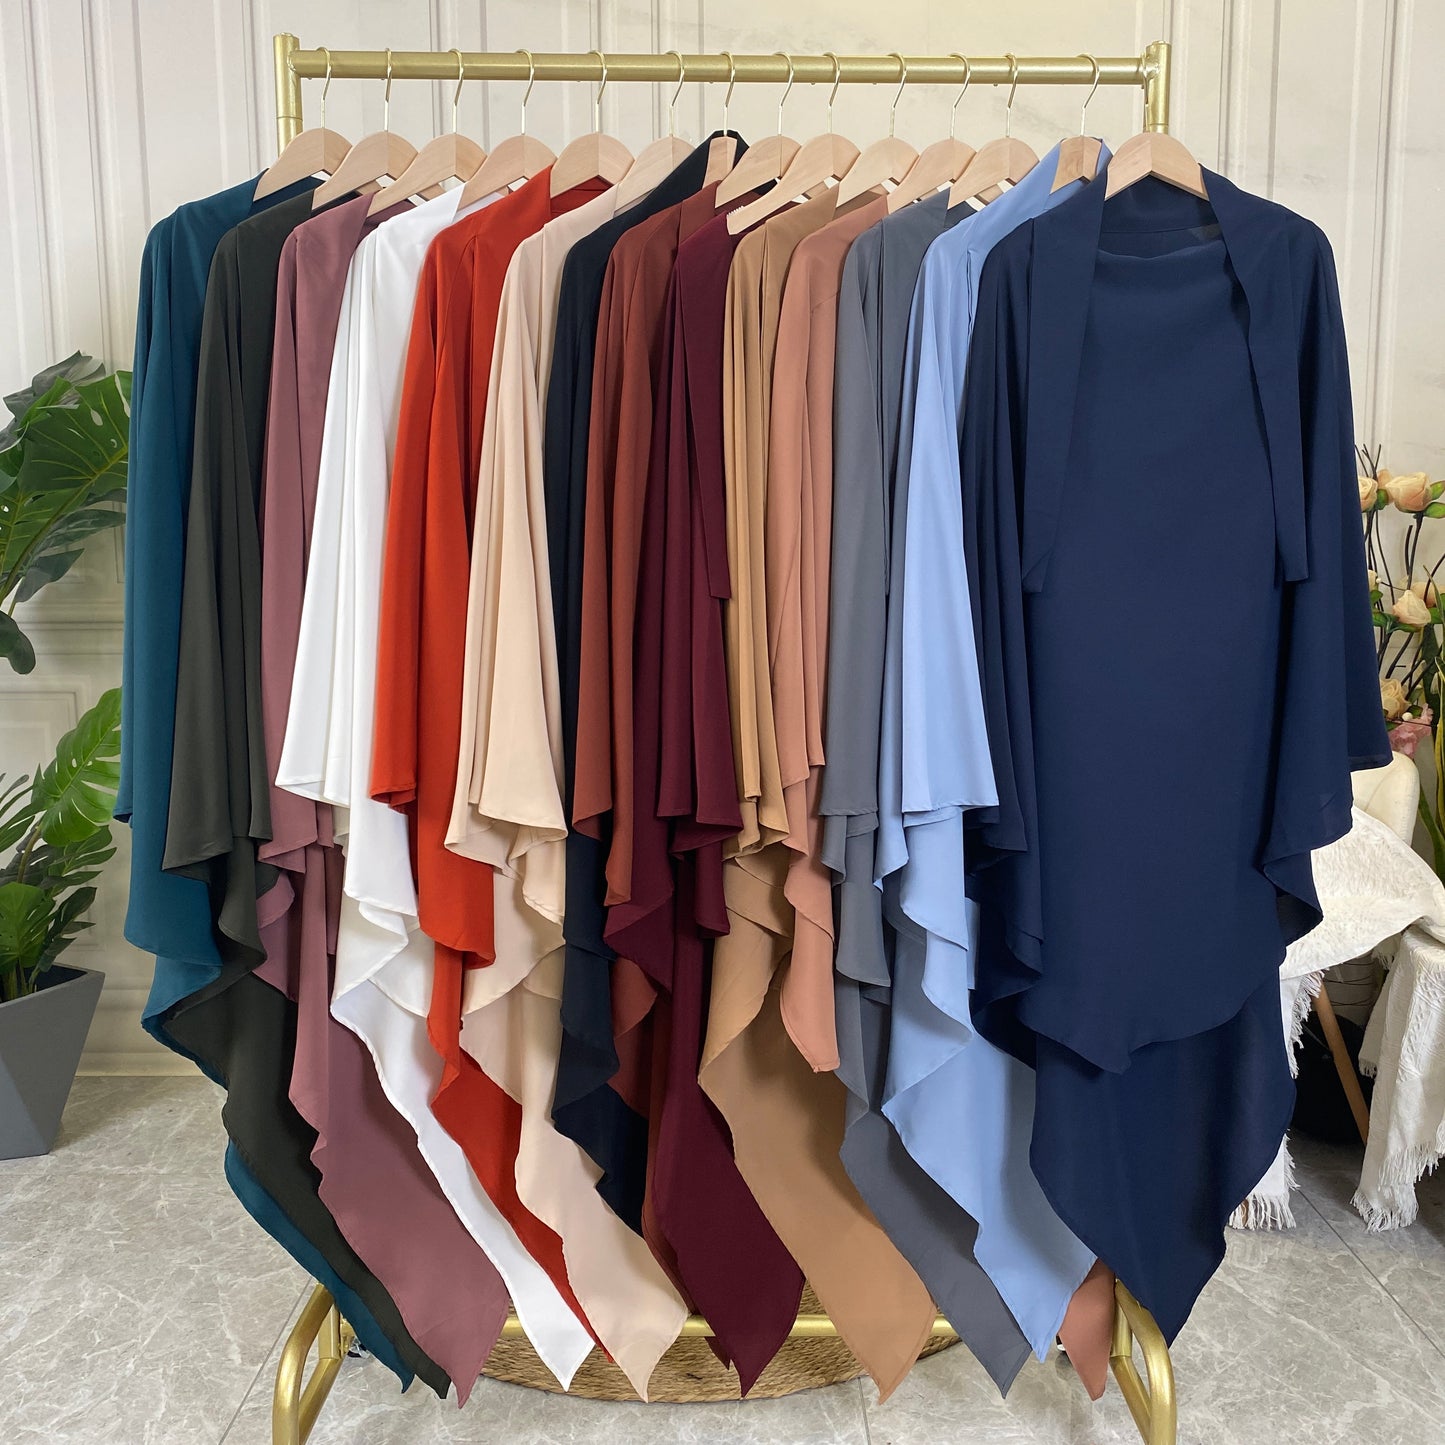 Khimar : Single Layer Triangular Diamond Instant Khimar-Hijab-Jilbab for Girls & Women in Single Layer Blue Color | Tie Back Burkha Jilbab Khimar Style Abaya Hijab Niqab Islamic Modest Wear